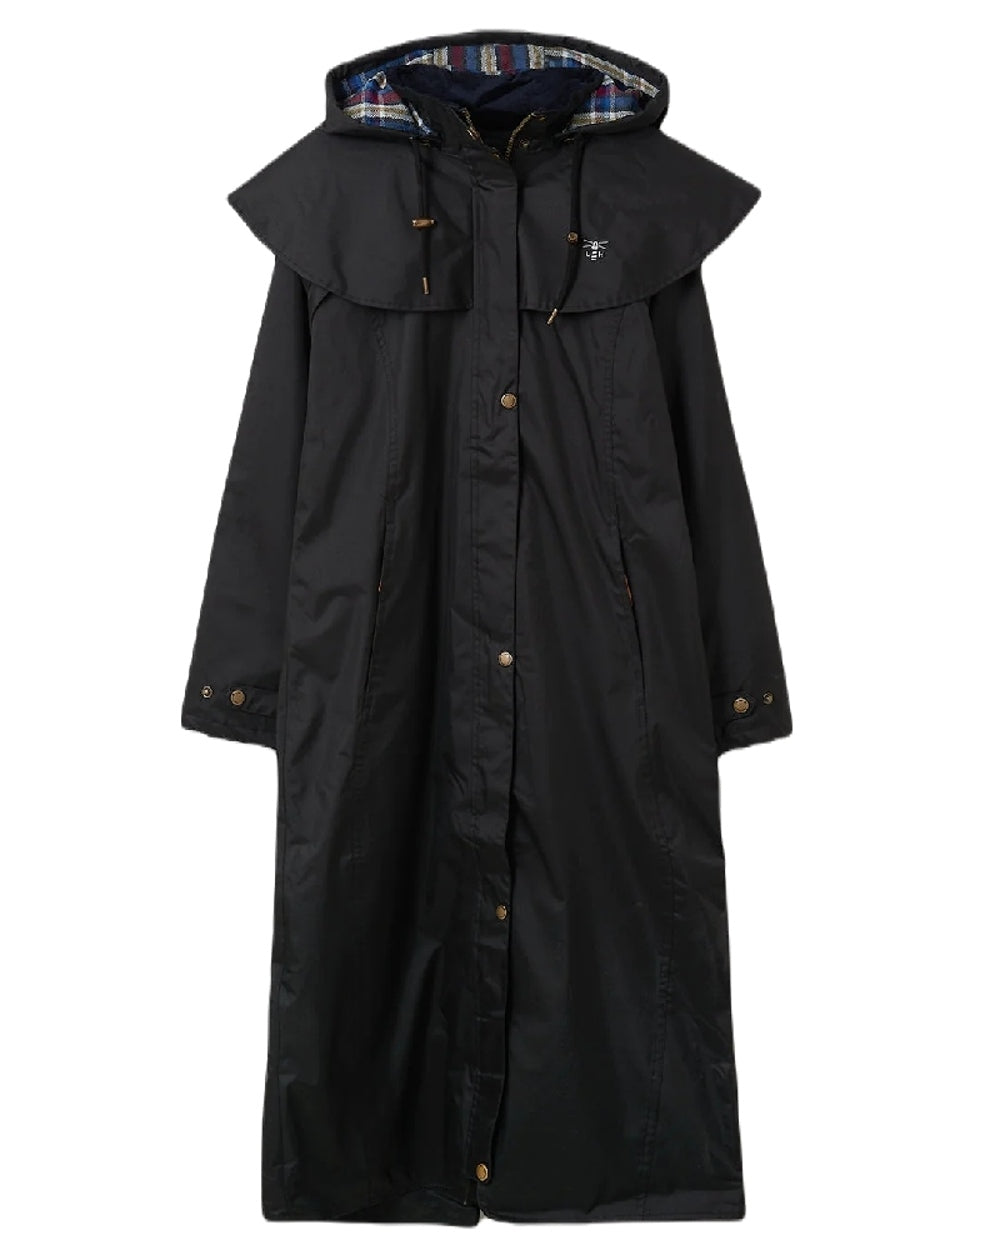 Lighthouse Outback Full Length Ladies Waterproof Raincoat in Black 